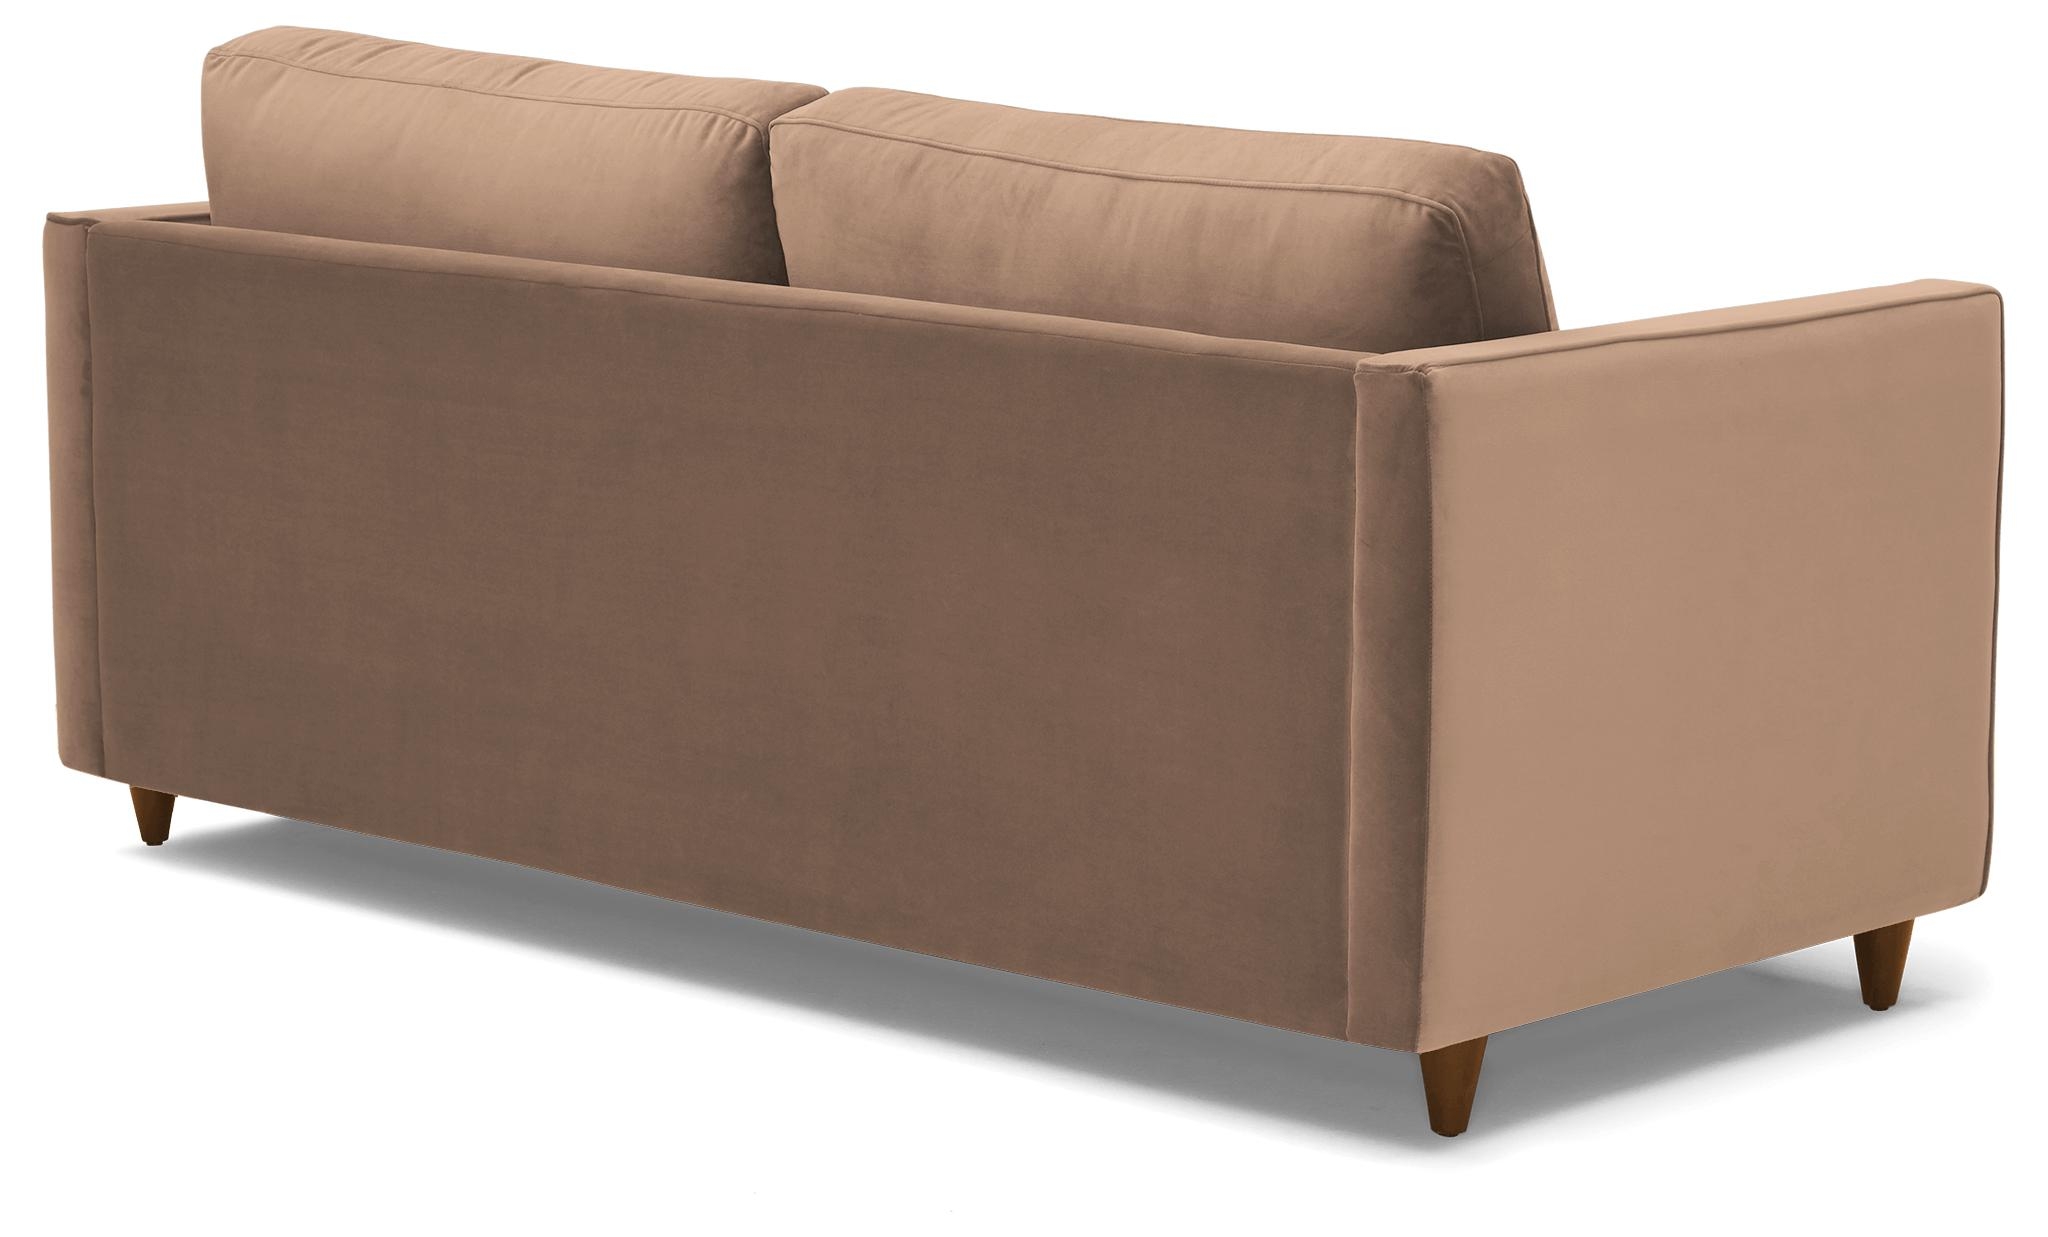 Pink Briar Mid Century Modern Sleeper Sofa - Royale Blush - Mocha - Image 3